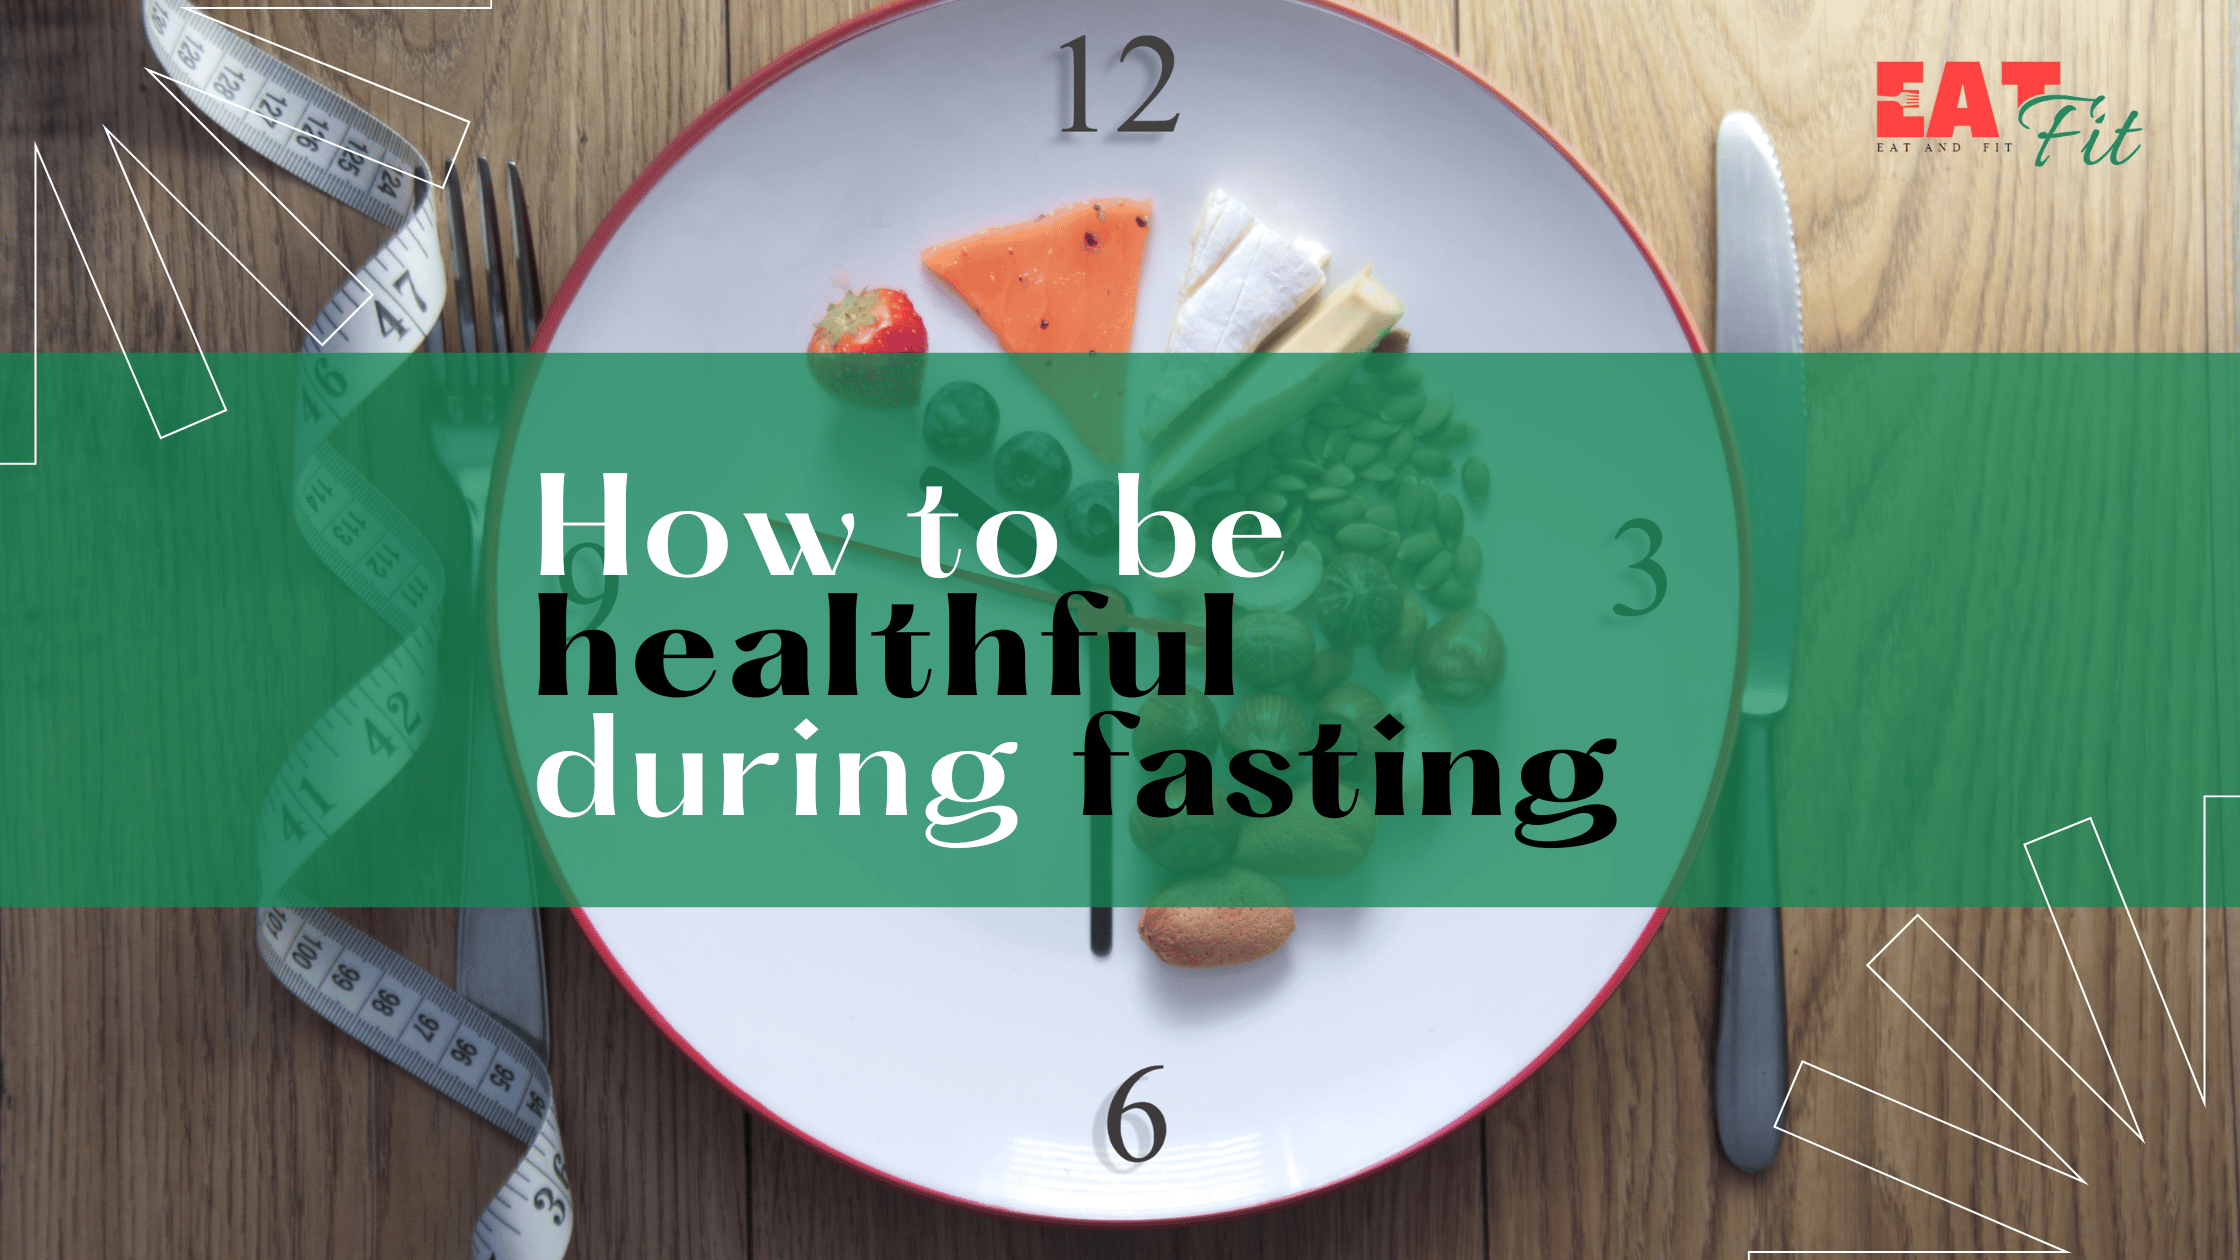 healthful fasting during Ramadan